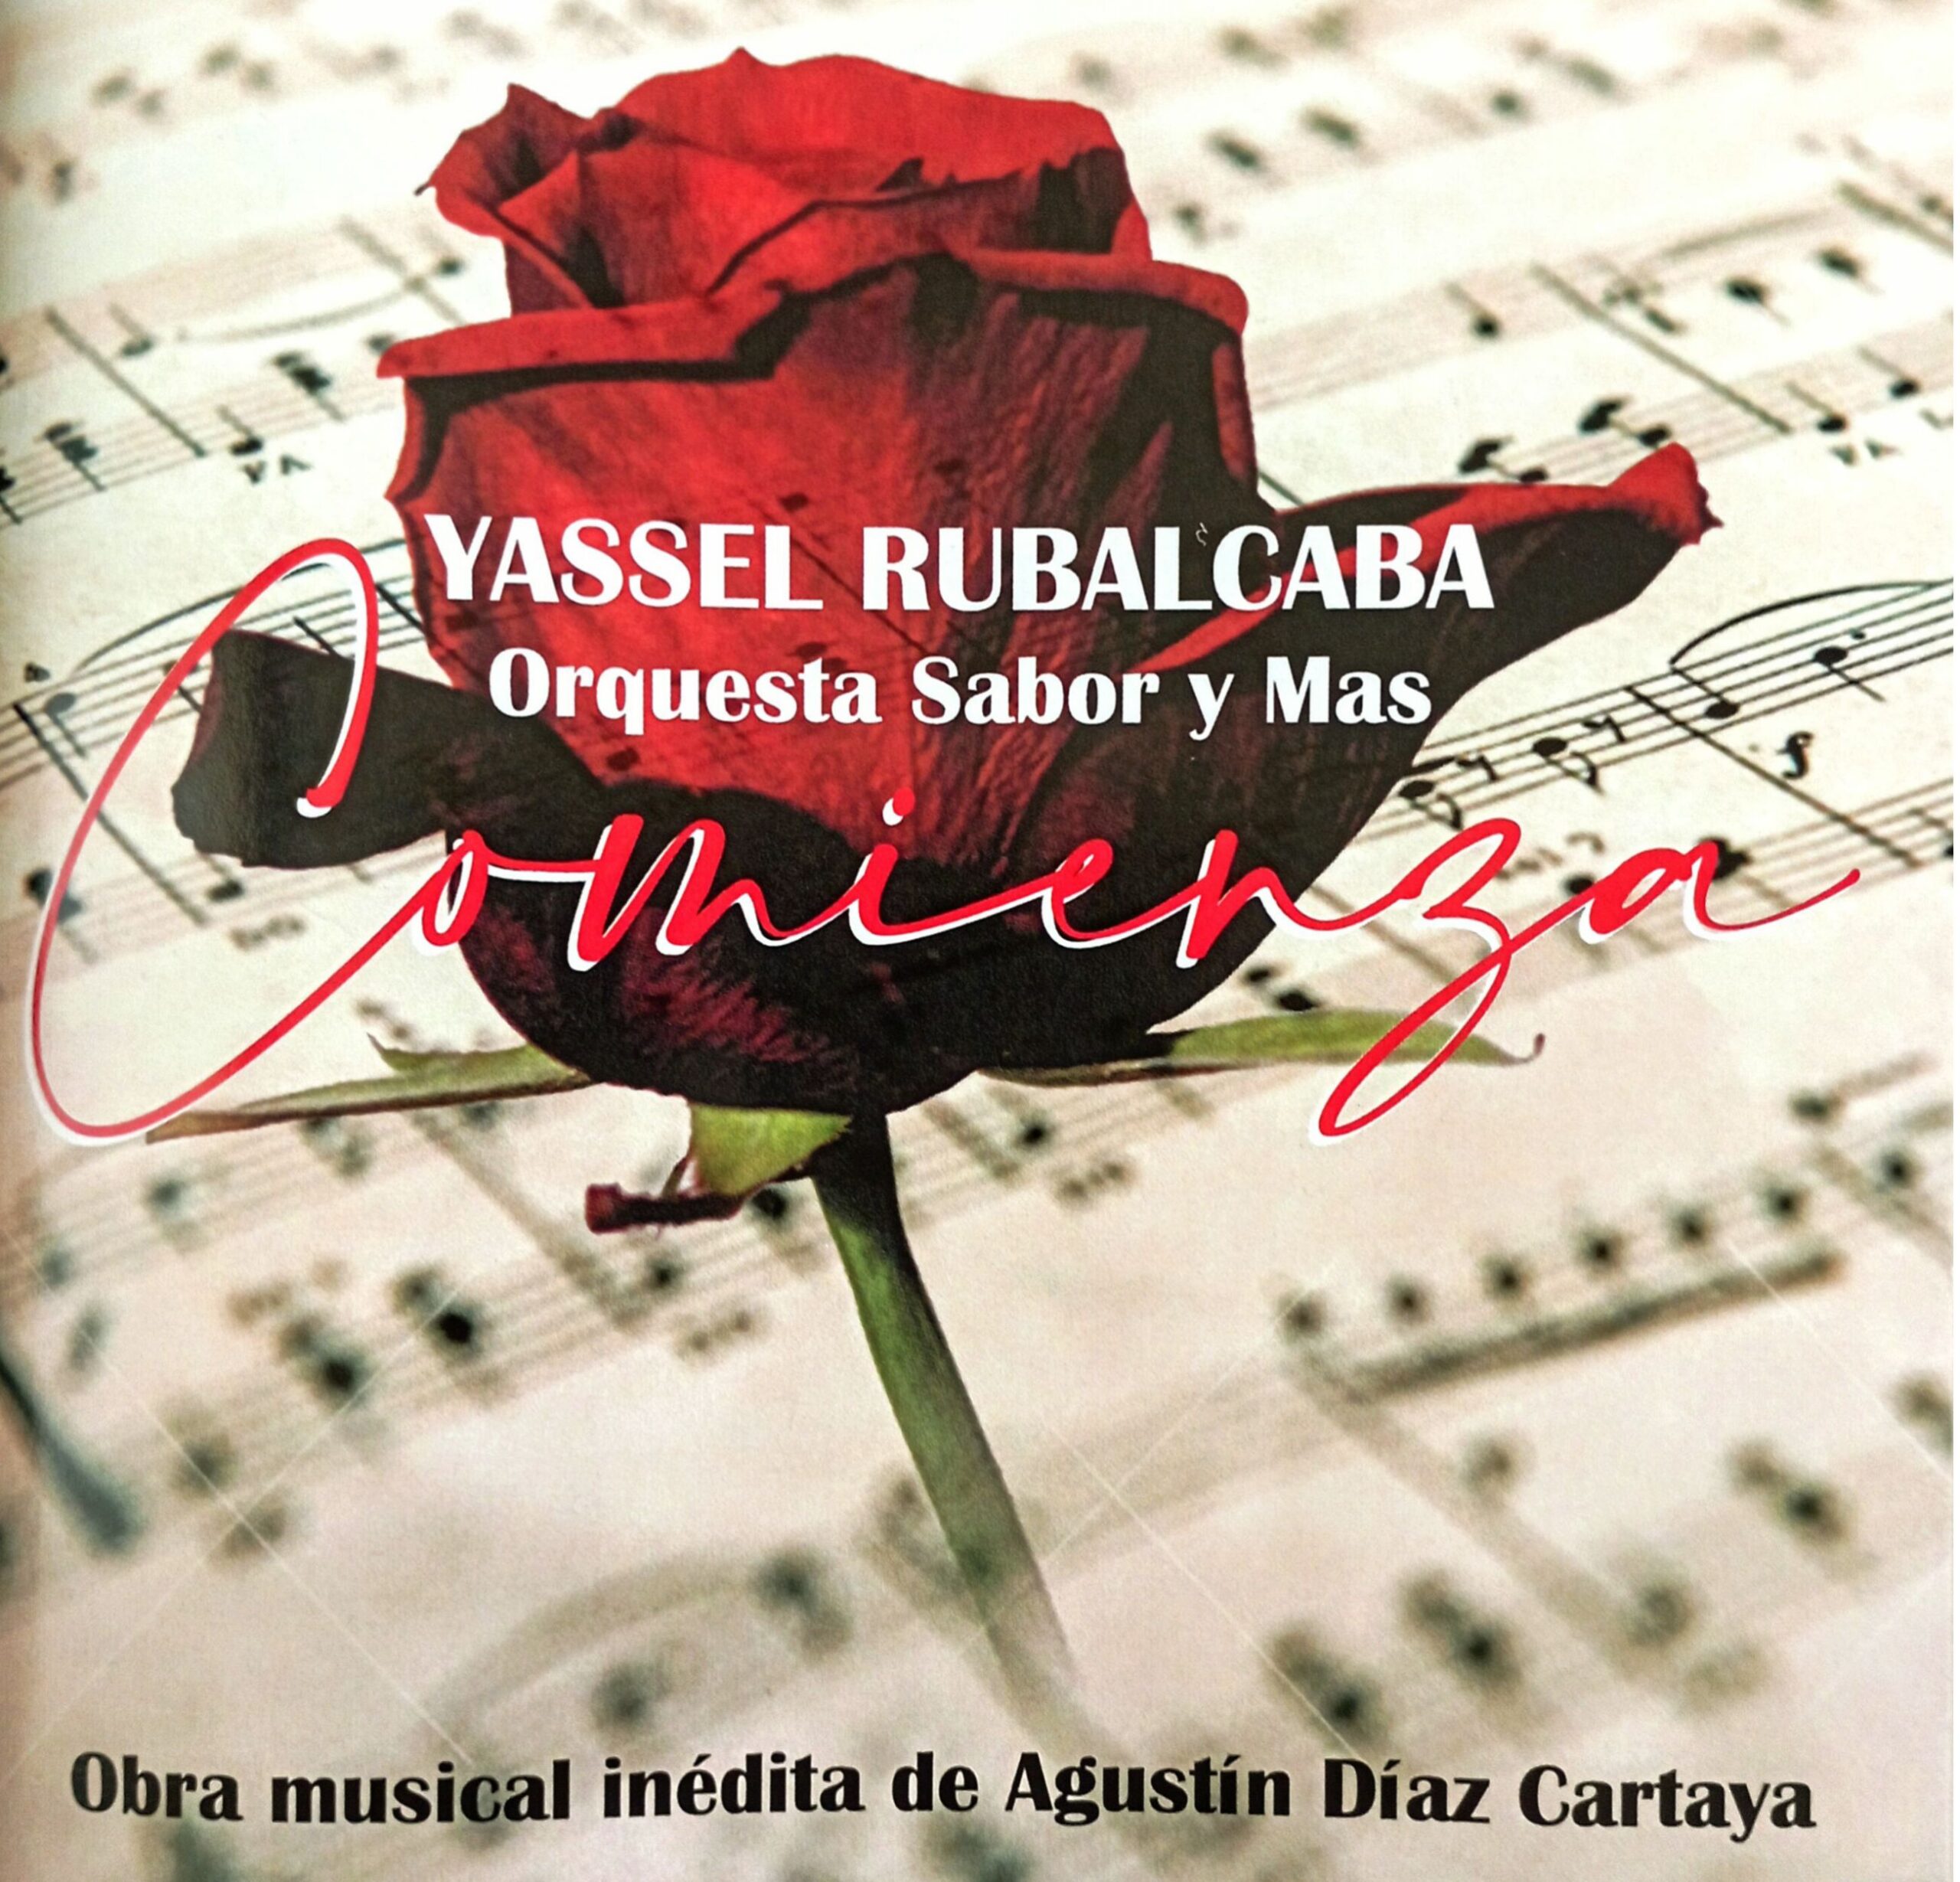 Rescate de la música inédita de Agustín Díaz Cartaya